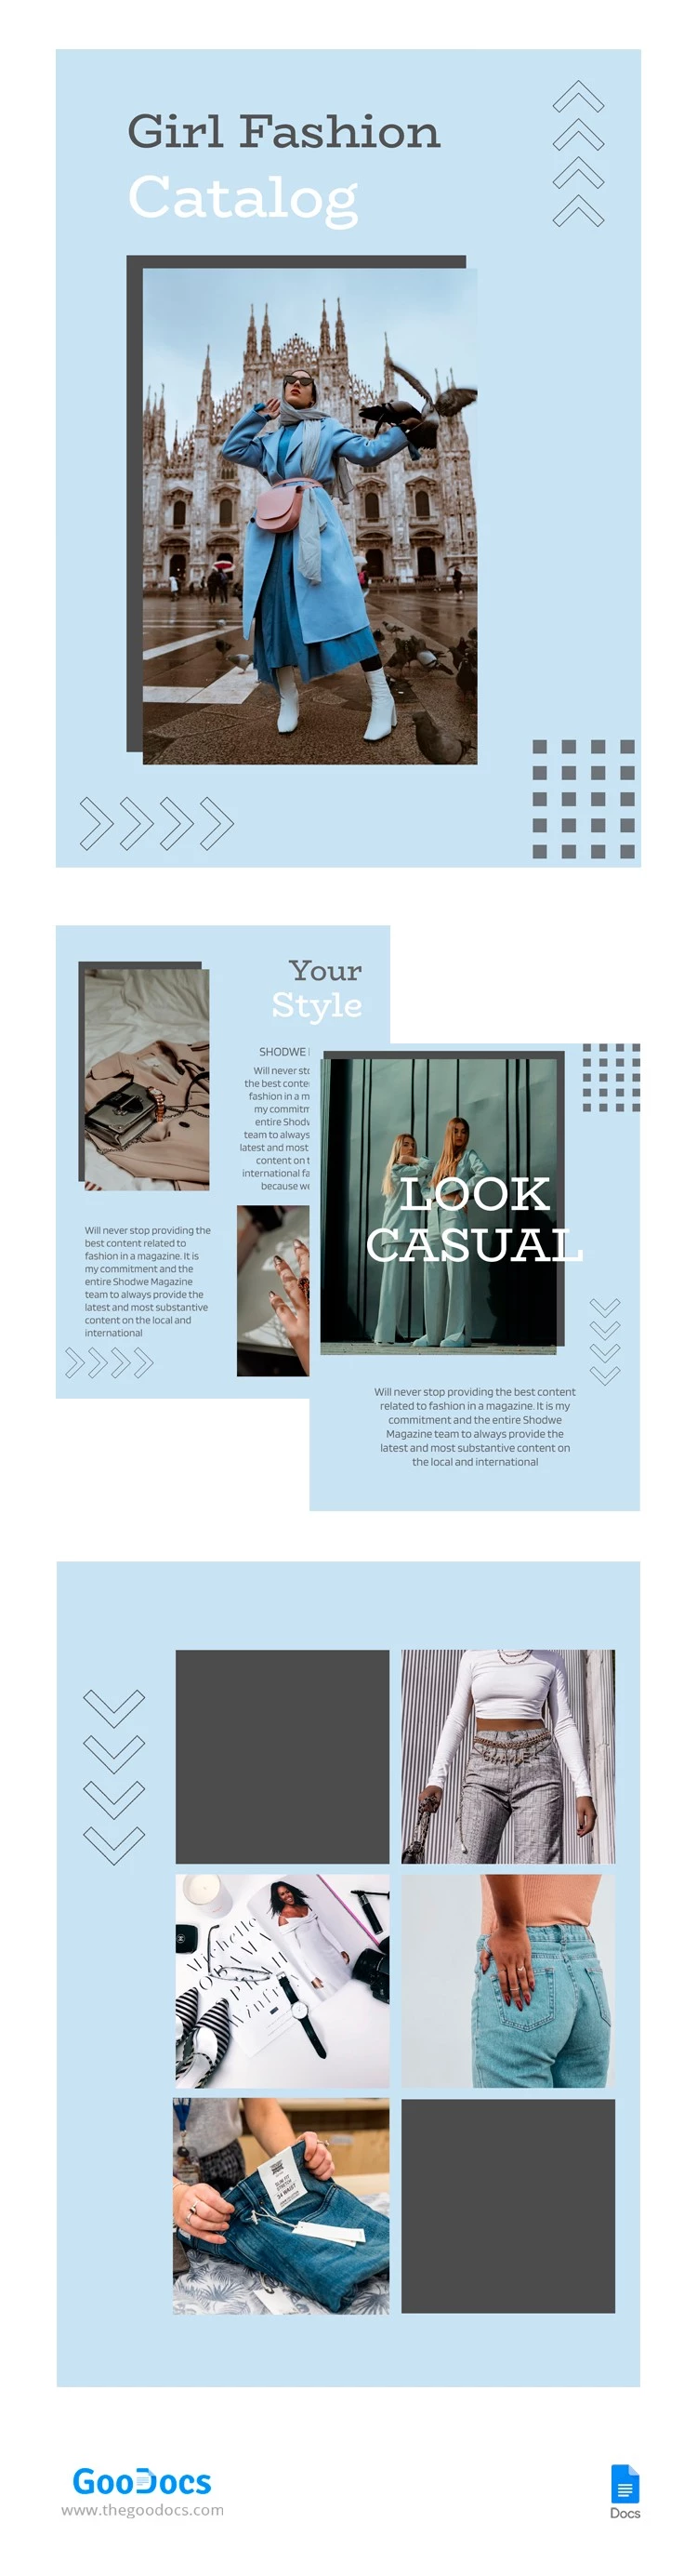 Girl Fashion Catalog - free Google Docs Template - 10064565